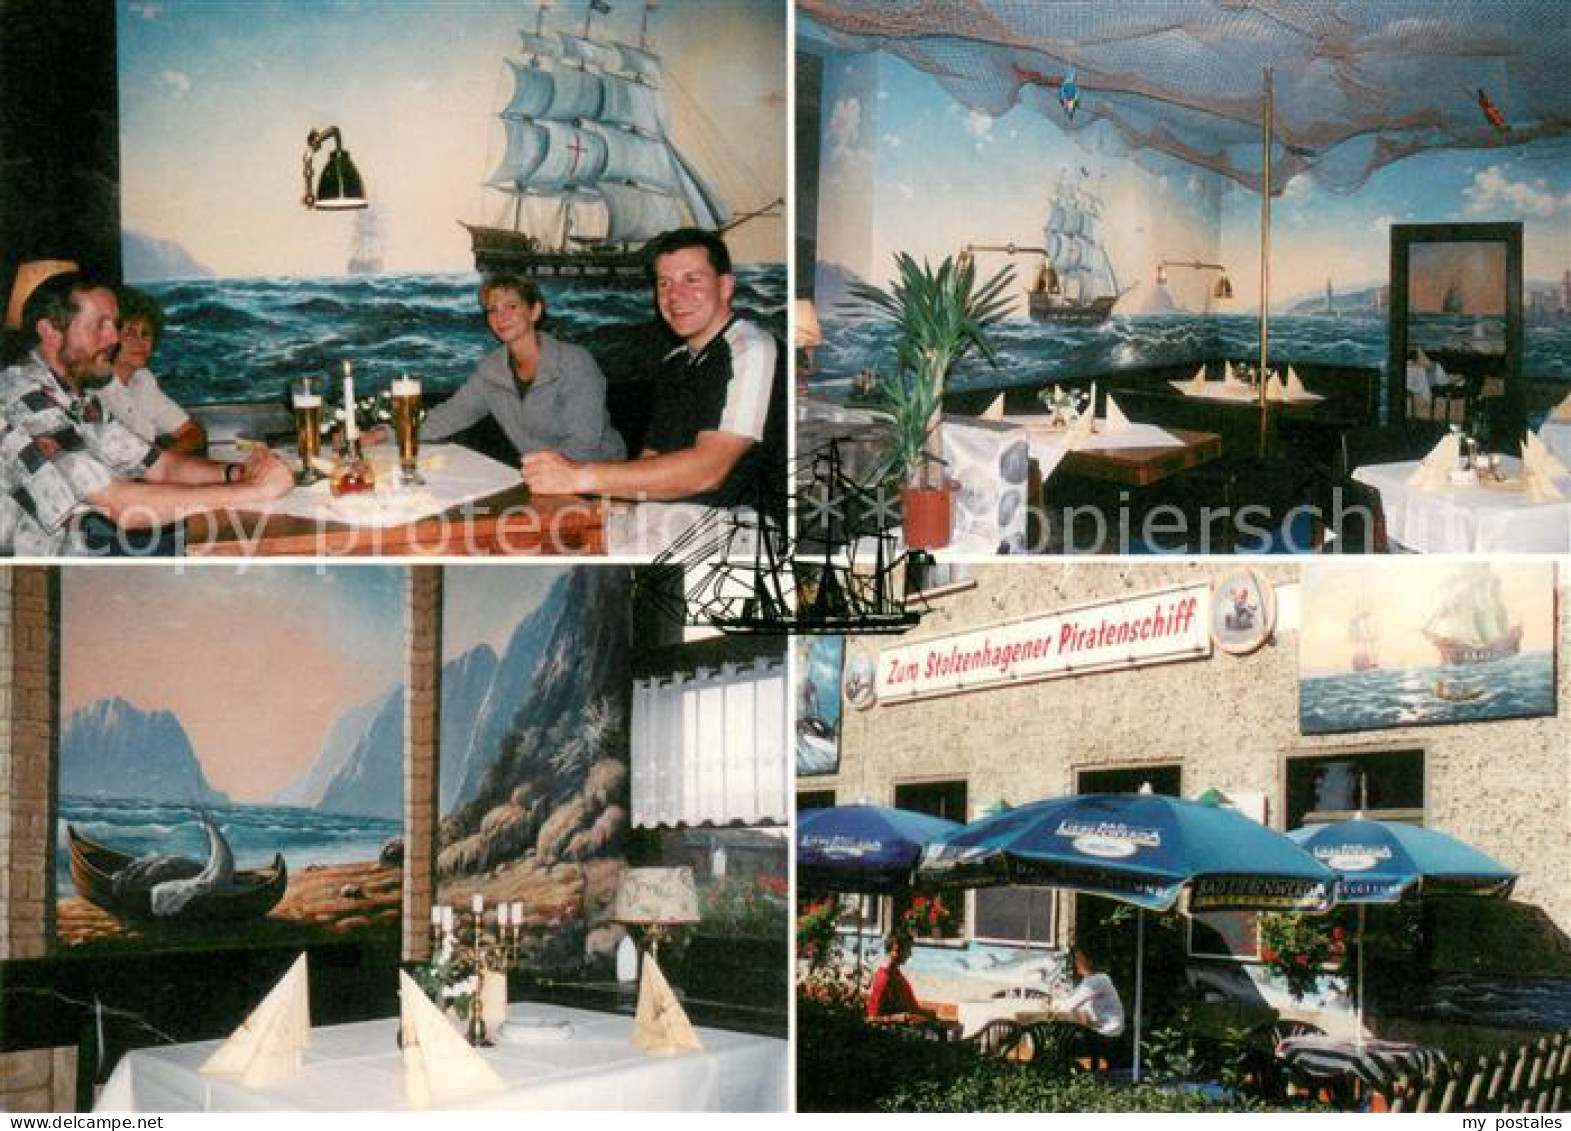 73646683 Stolzenhagen Wandlitz Restaurant Stolzenhagener Piratenschiff Gastraeum - Wandlitz